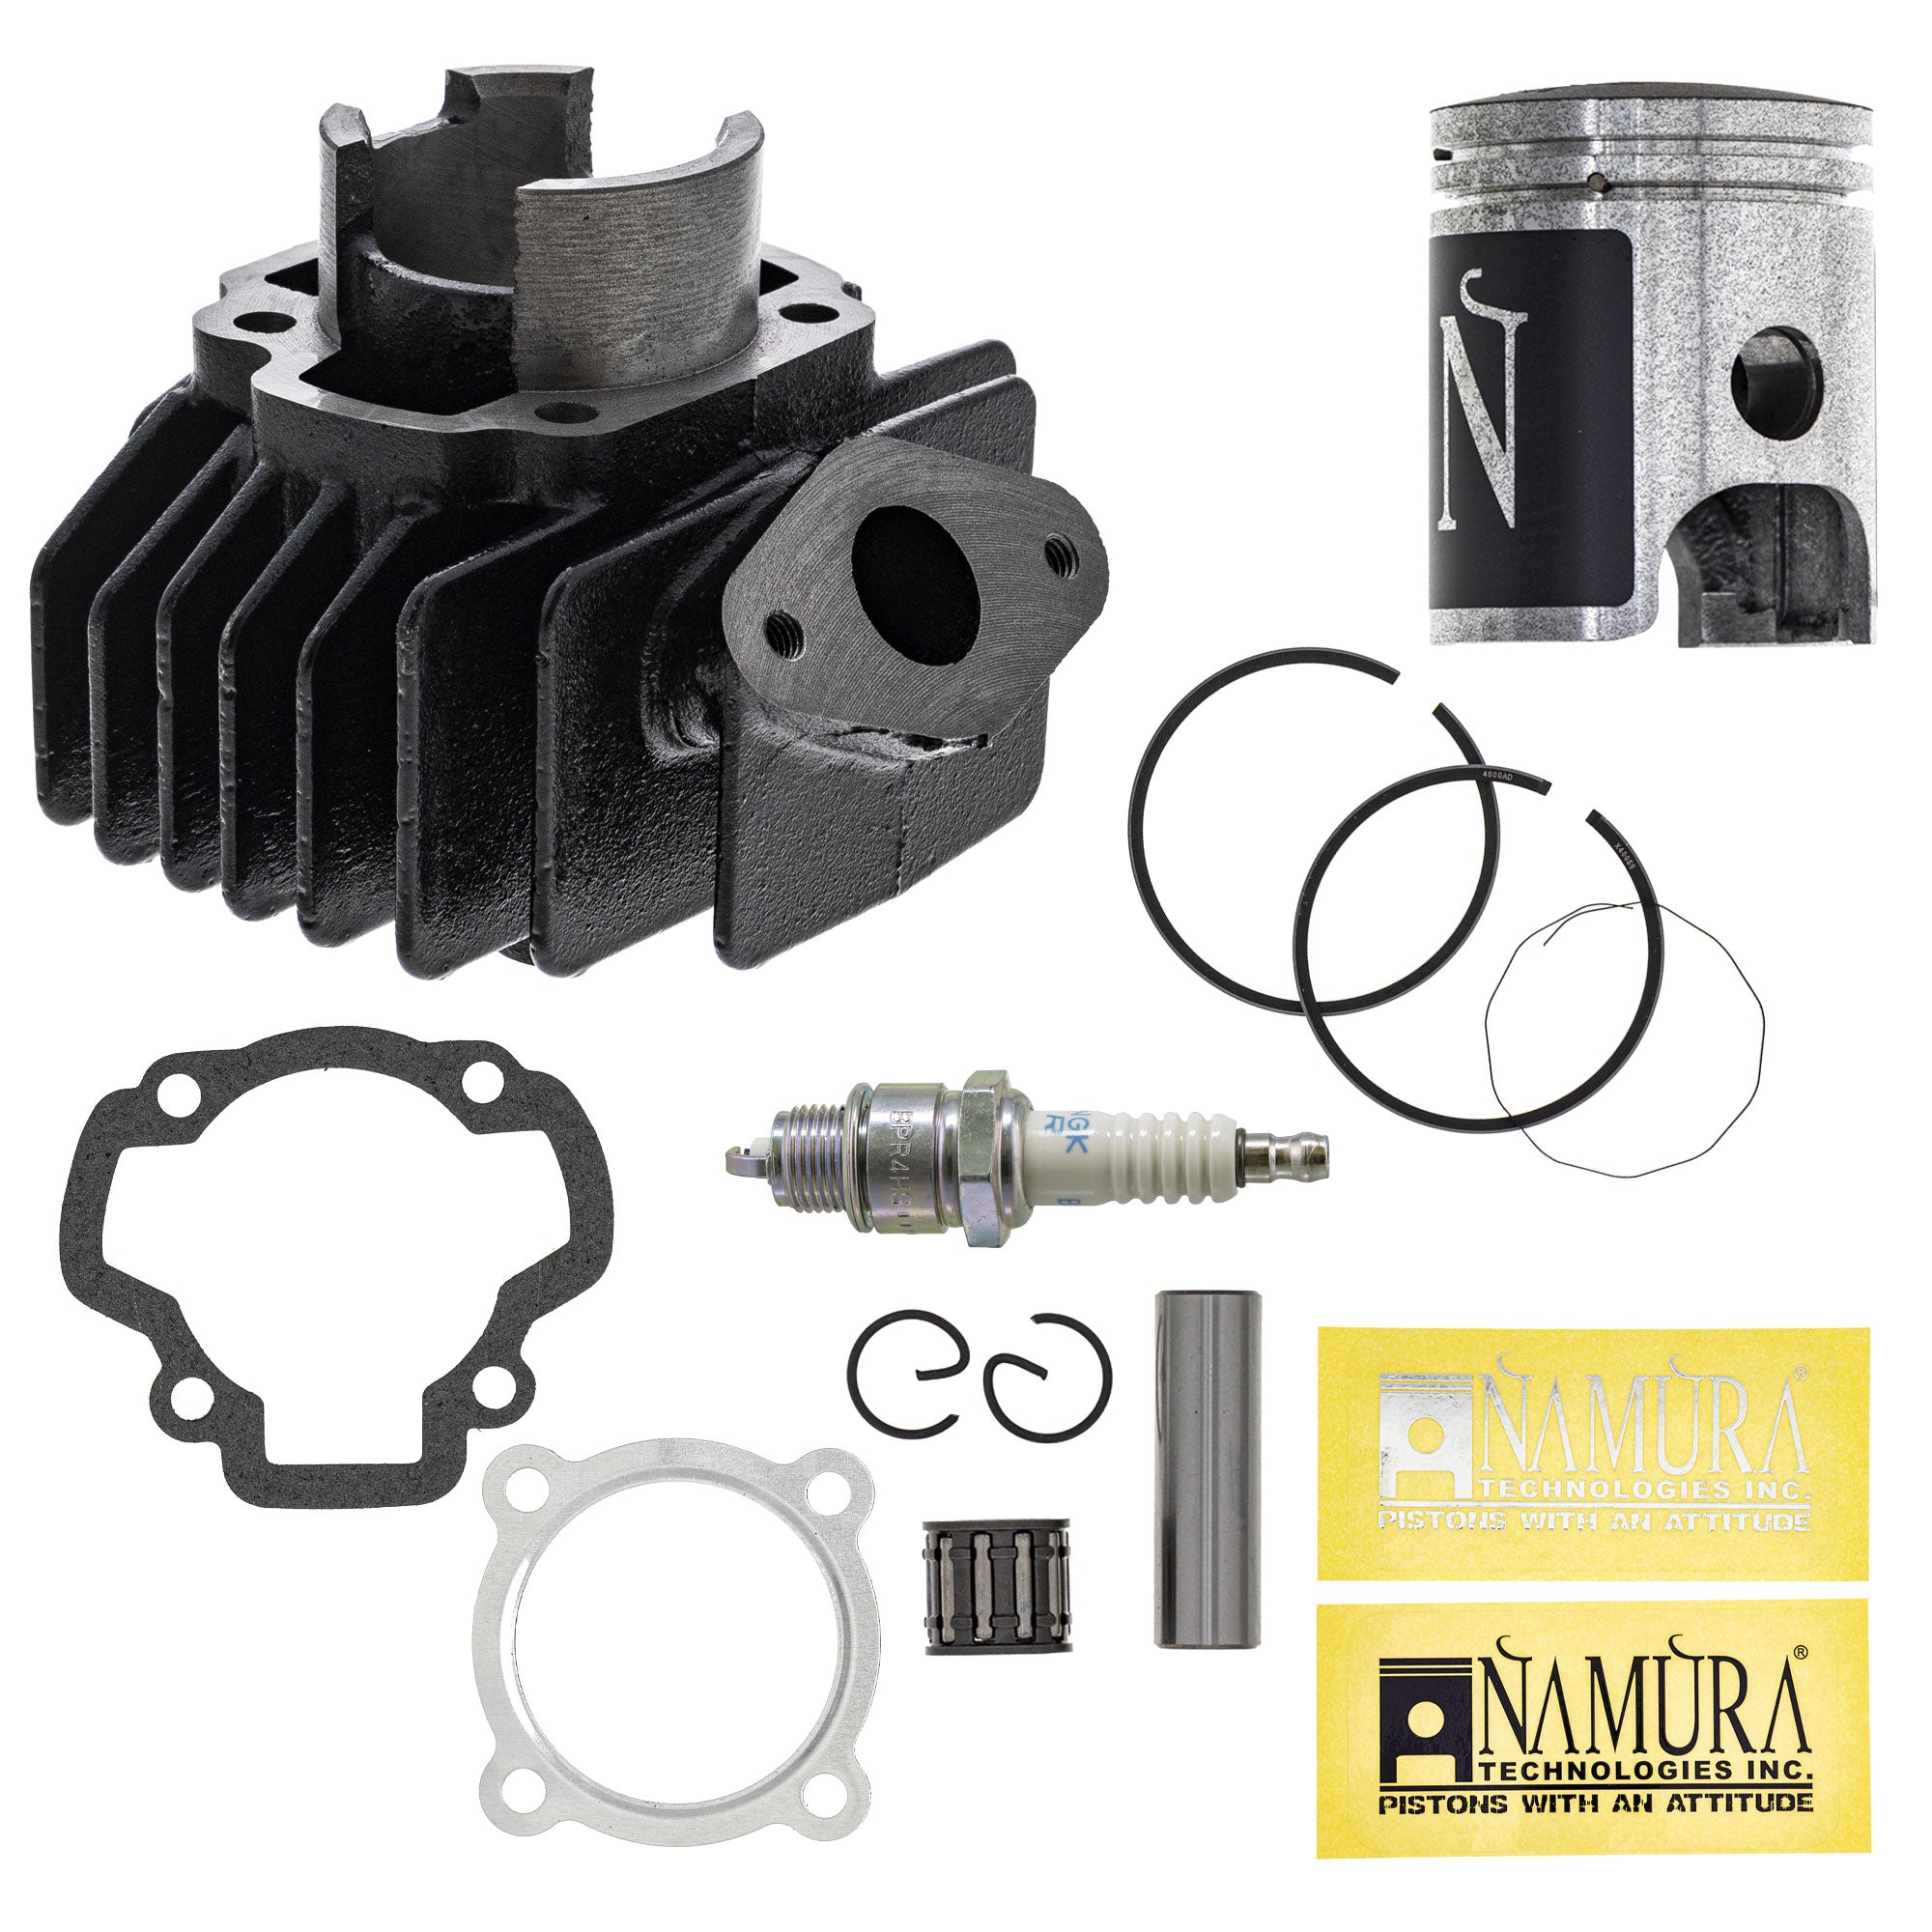 Cylinder Namura Piston Gasket Spark Plug Kit for PW50 NICHE MK1012525